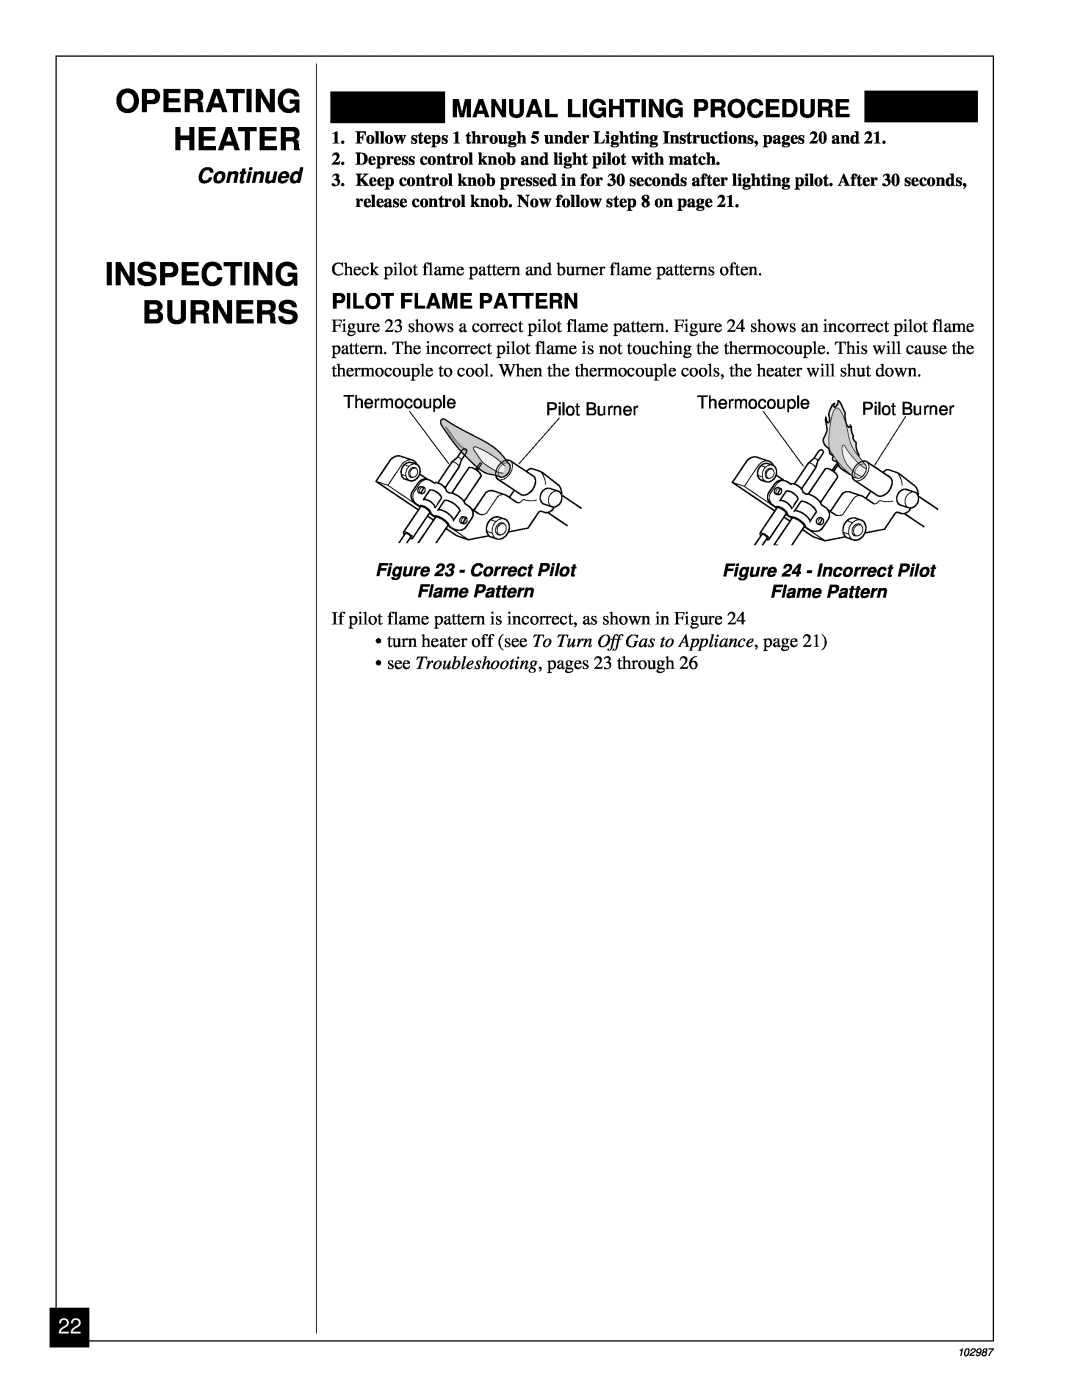 Desa CGD3018P installation manual Inspecting Burners, Manual Lighting Procedure, Operating Heater, Continued 